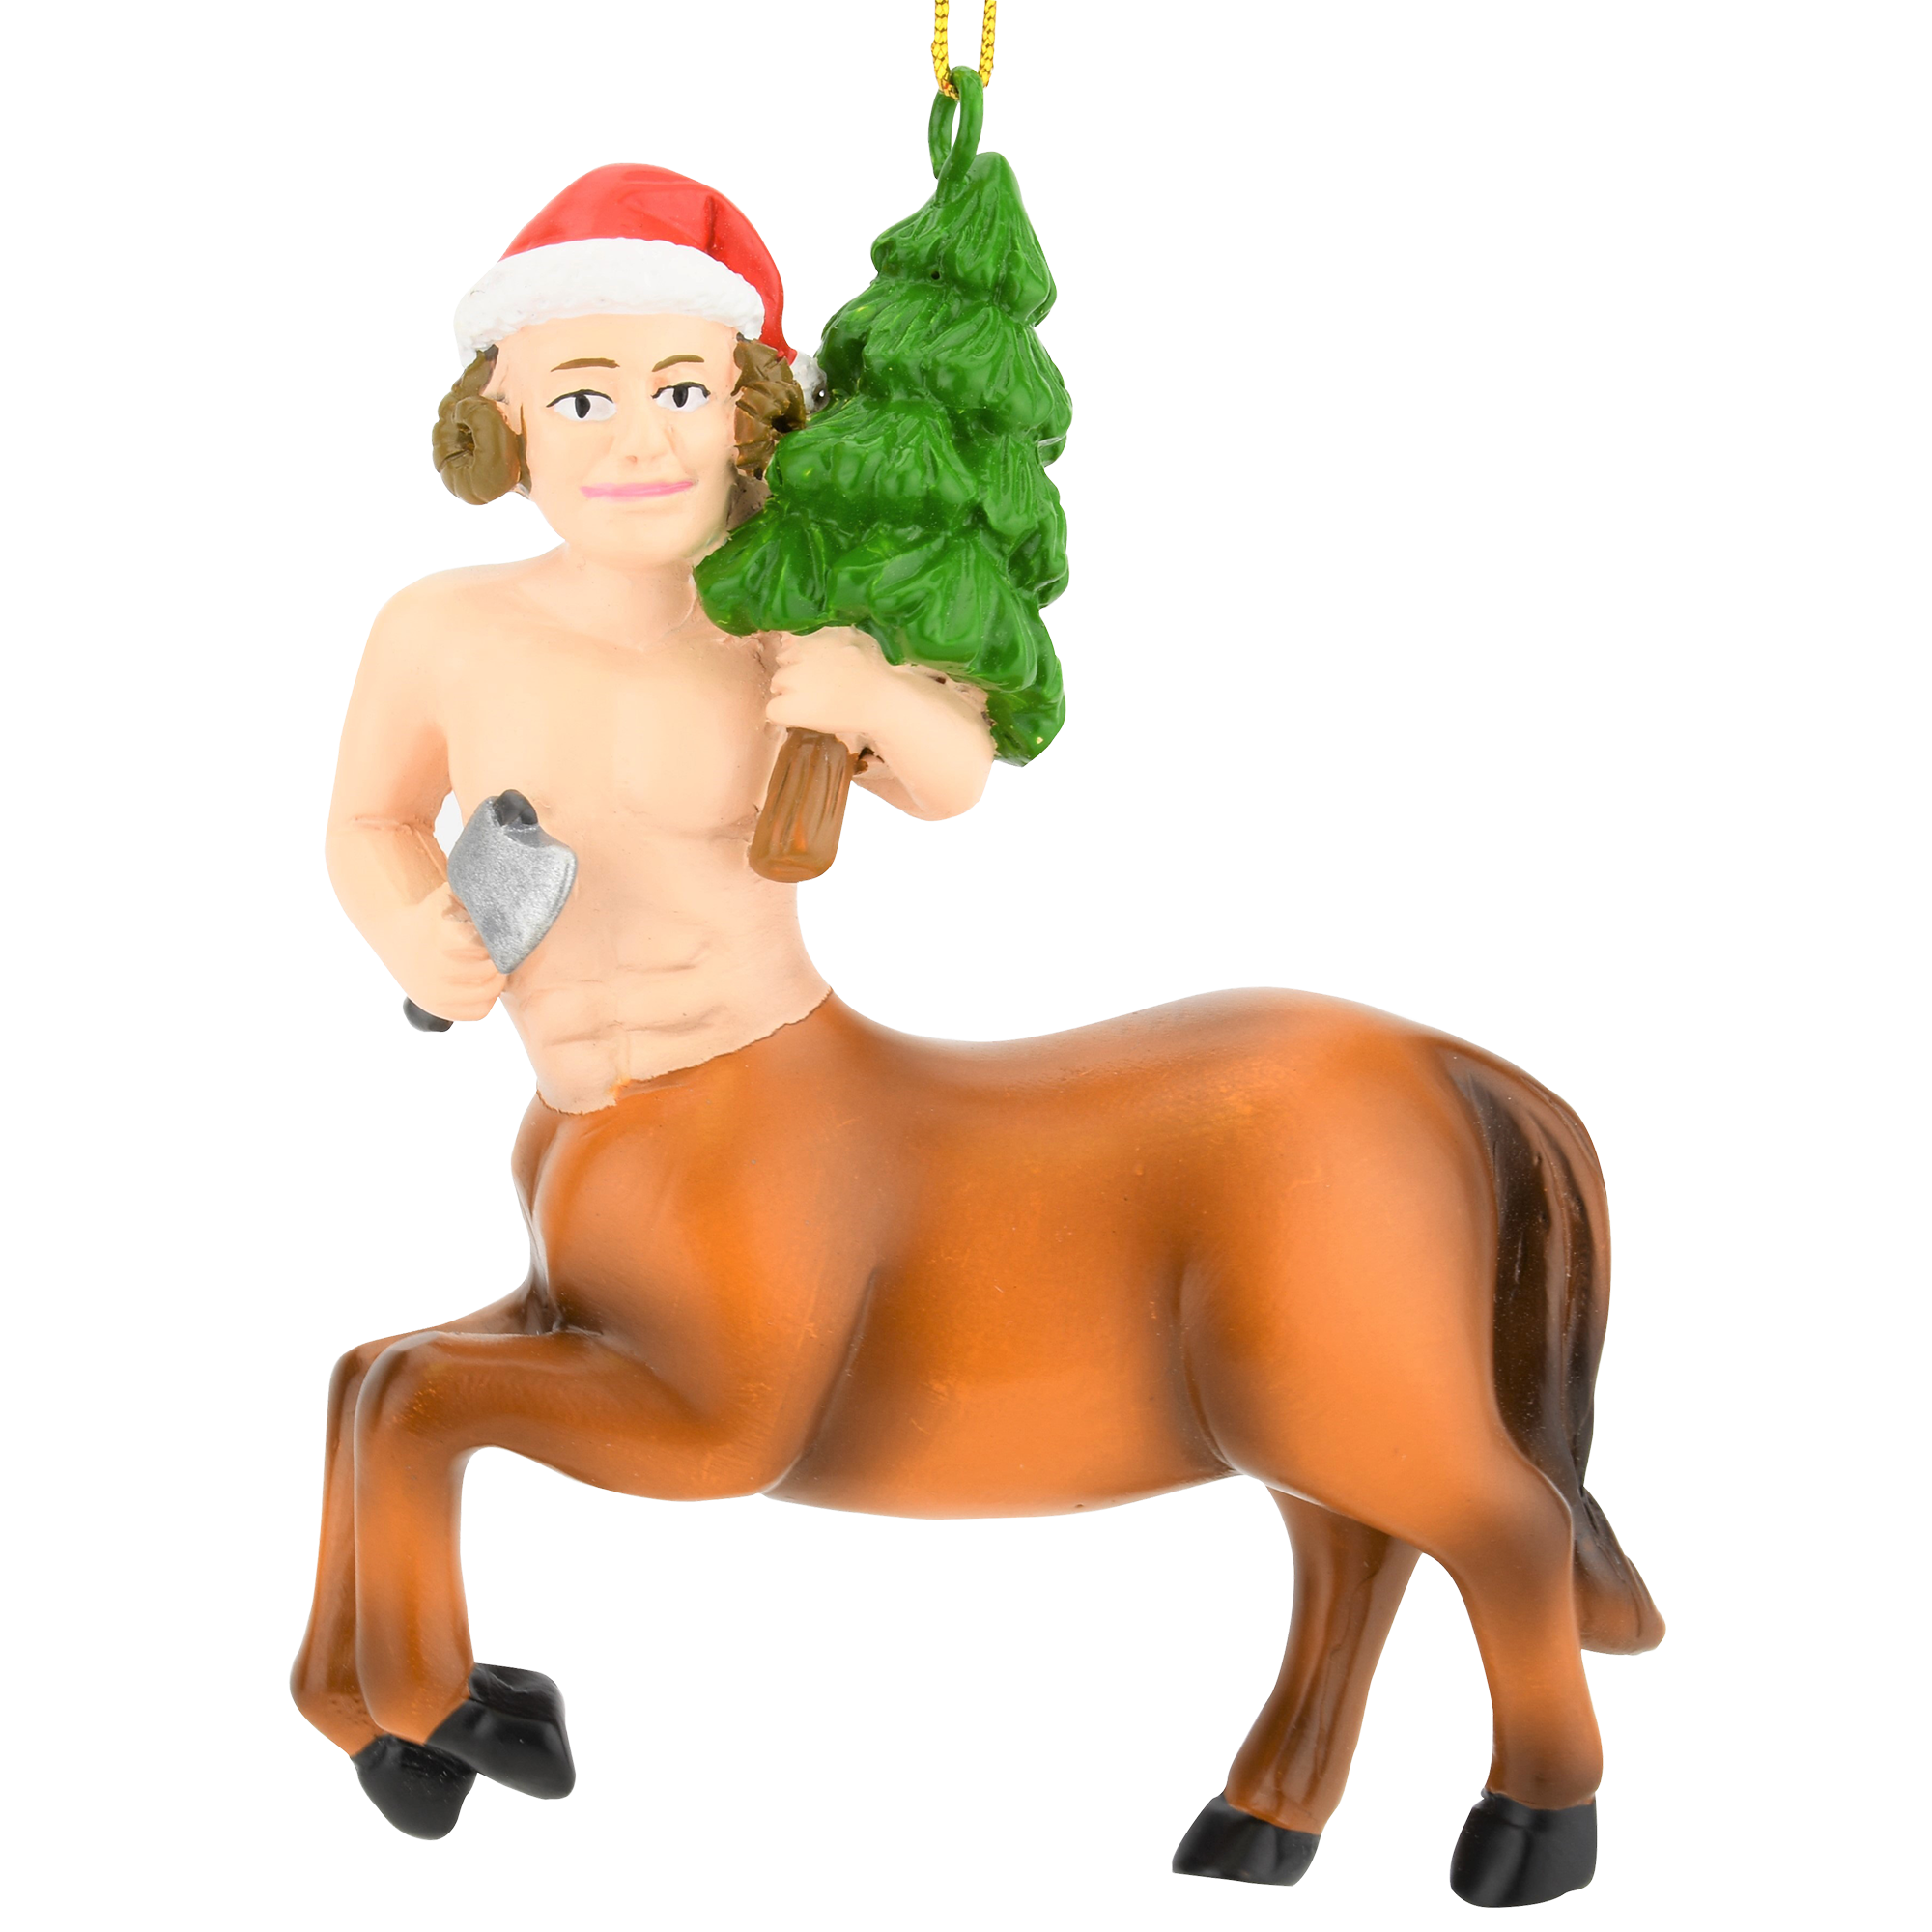 centaur Christmas ornament